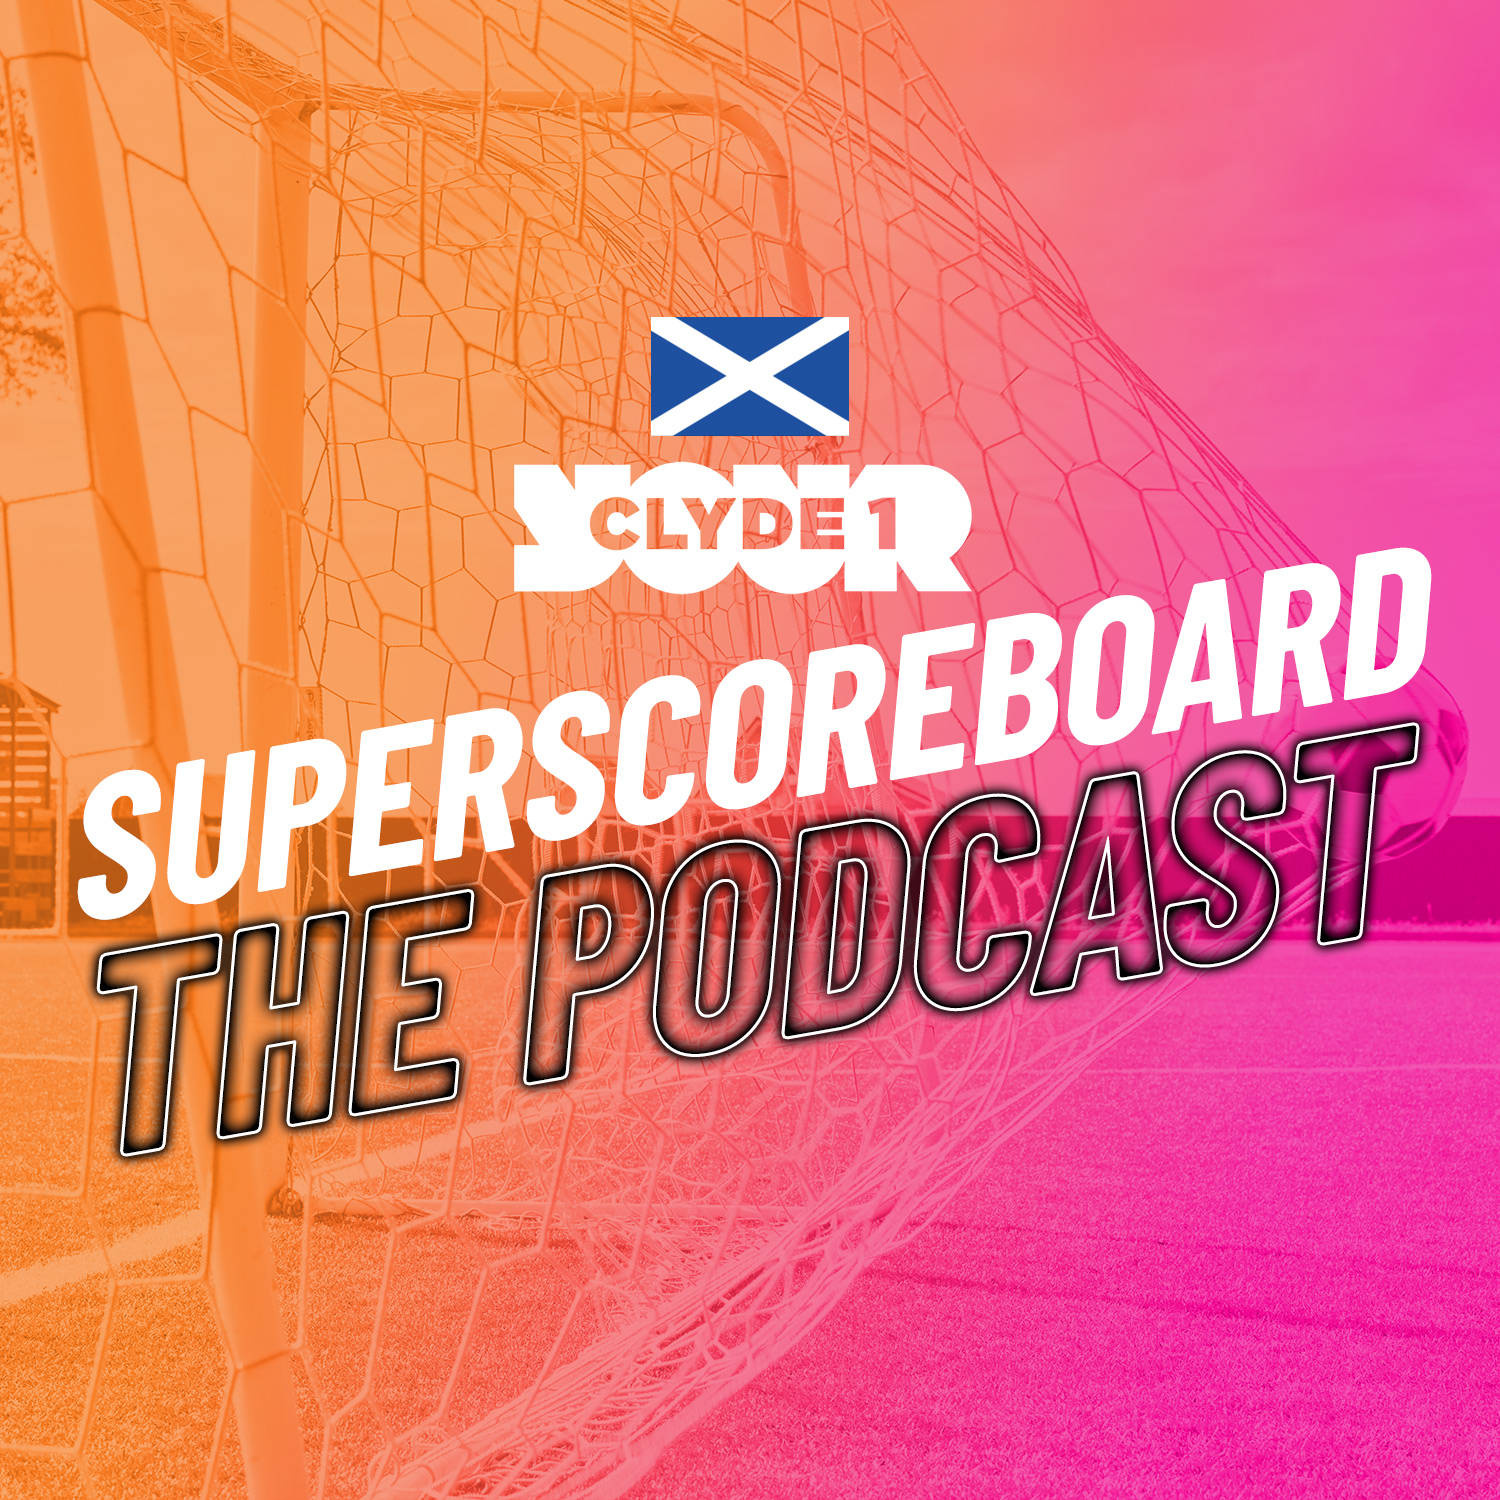 Wednesday 20th December Clyde 1 Superscoreboard